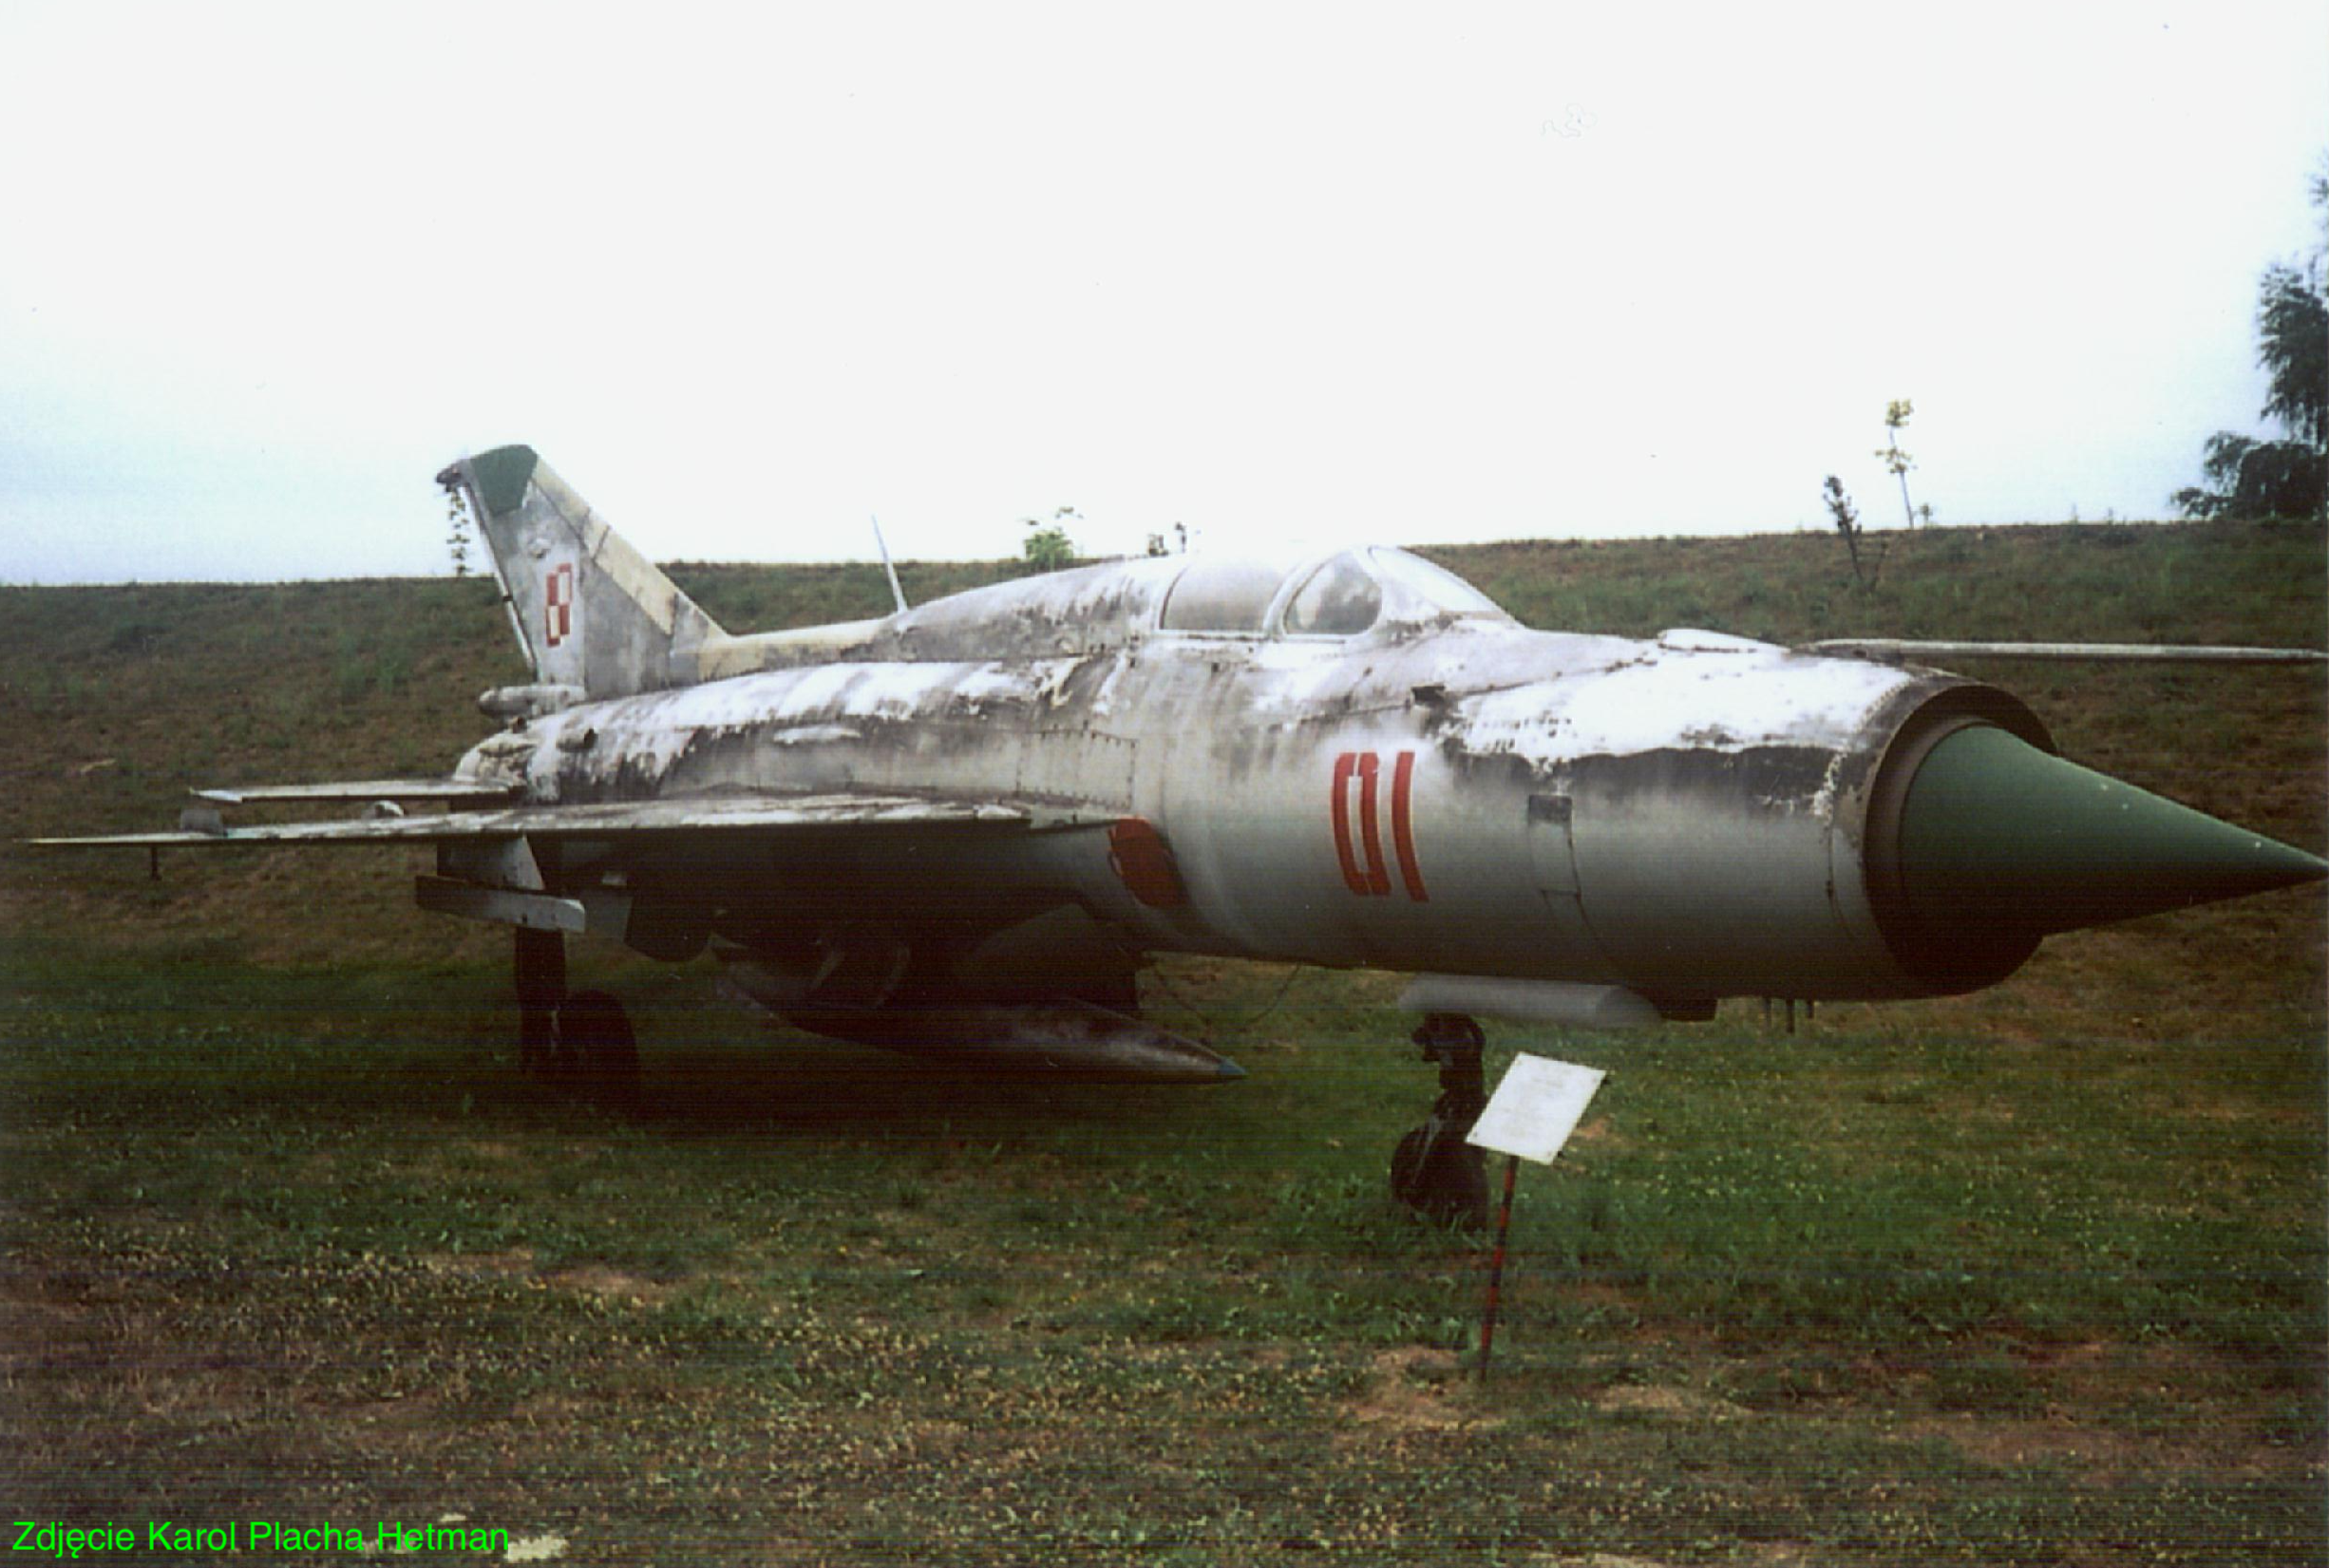 MiG-21 PFM nb 01. 2002 year. Photo by Karol Placha Hetman